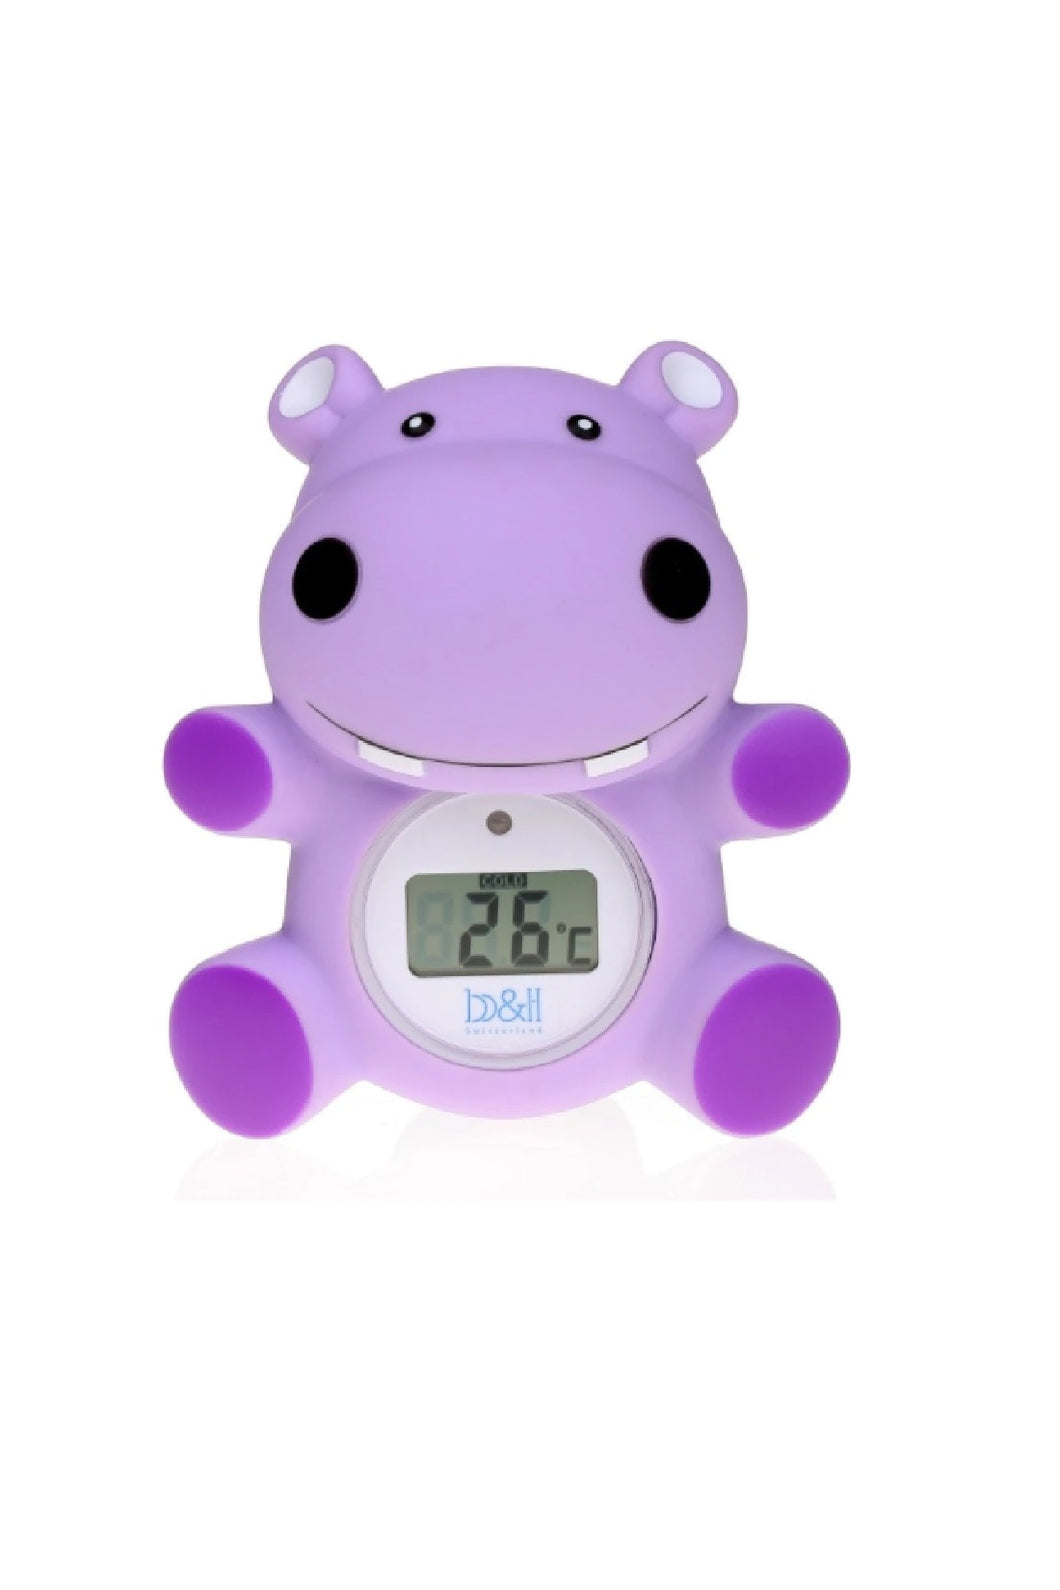 B&H Bath Room Thermometer Hippo